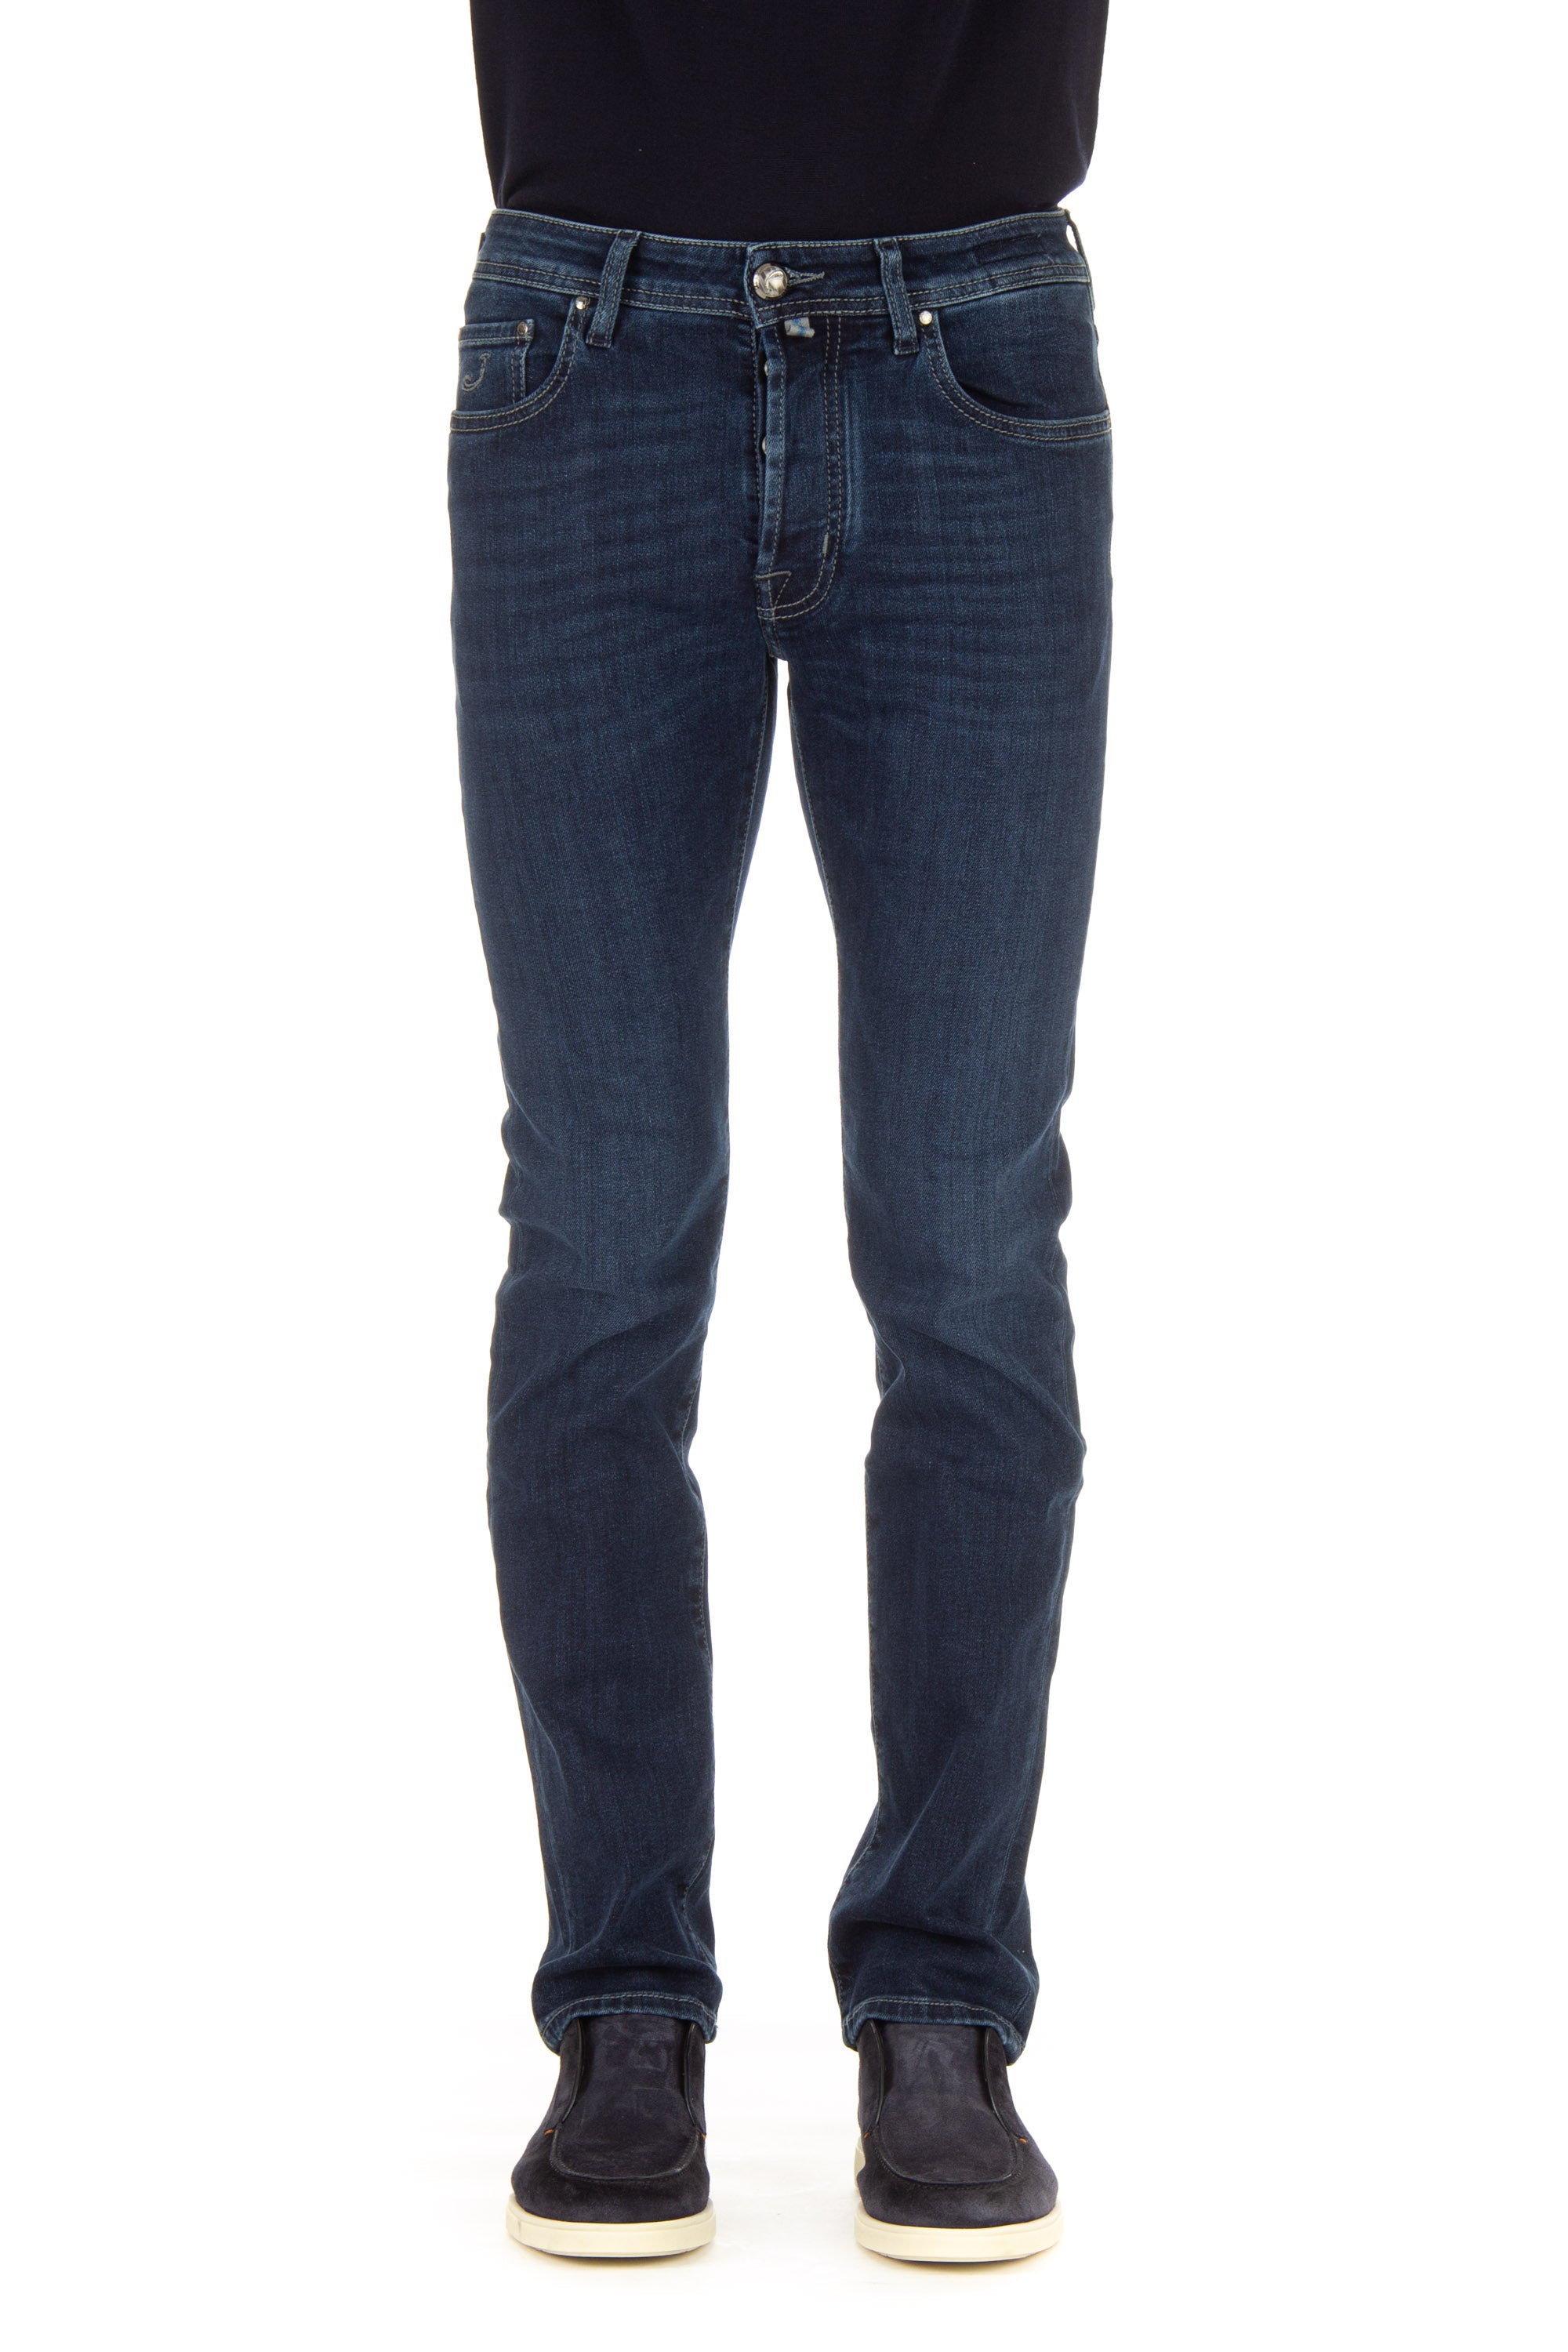 Bard fit blue suede label jeans